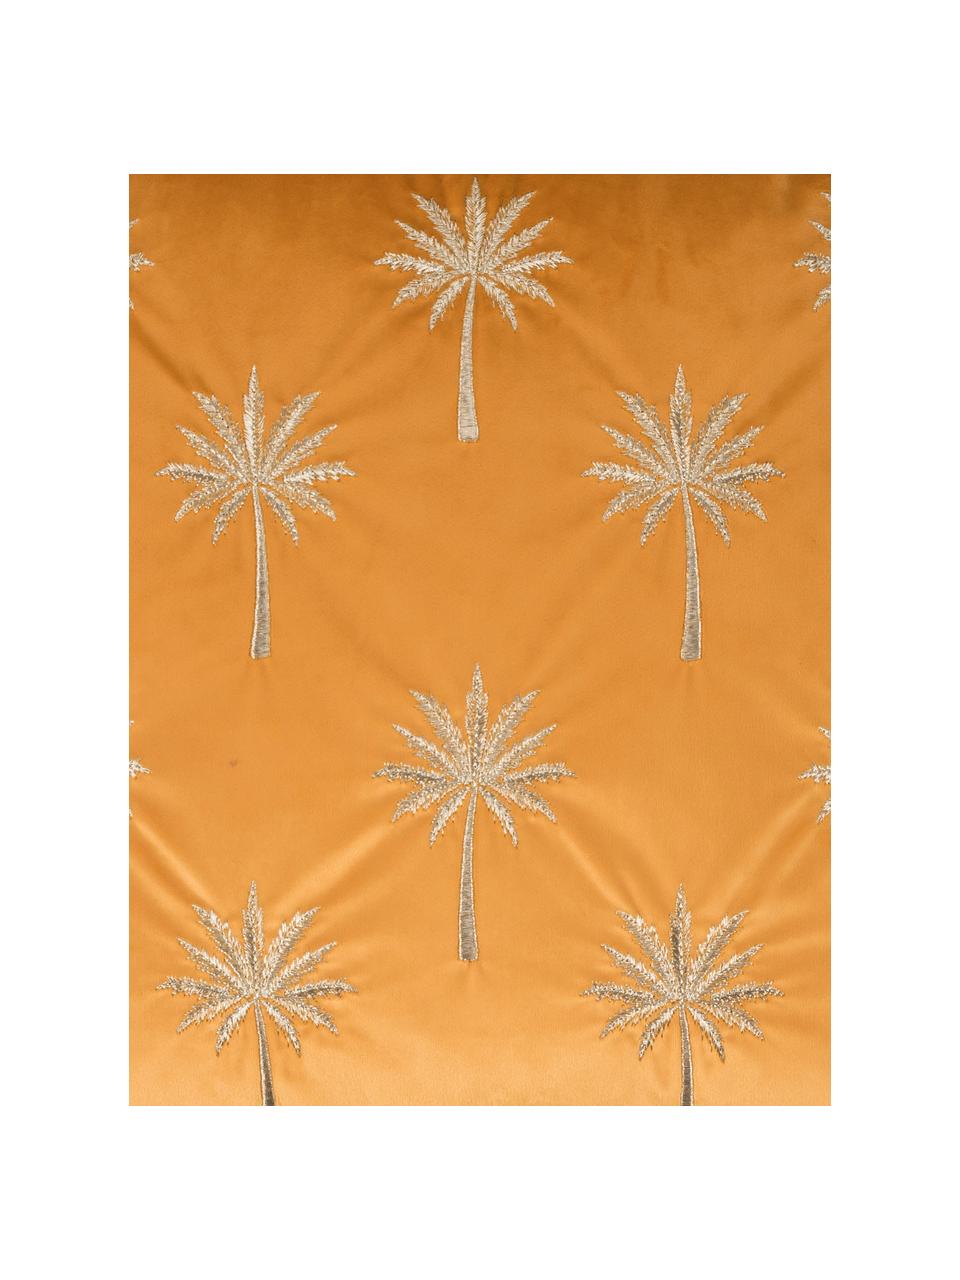 Geborduurde fluwelen kussenhoes Palms met bies, 100% fluweel (polyester), Oranje-geel, goudkleurig, 45 x 45 cm